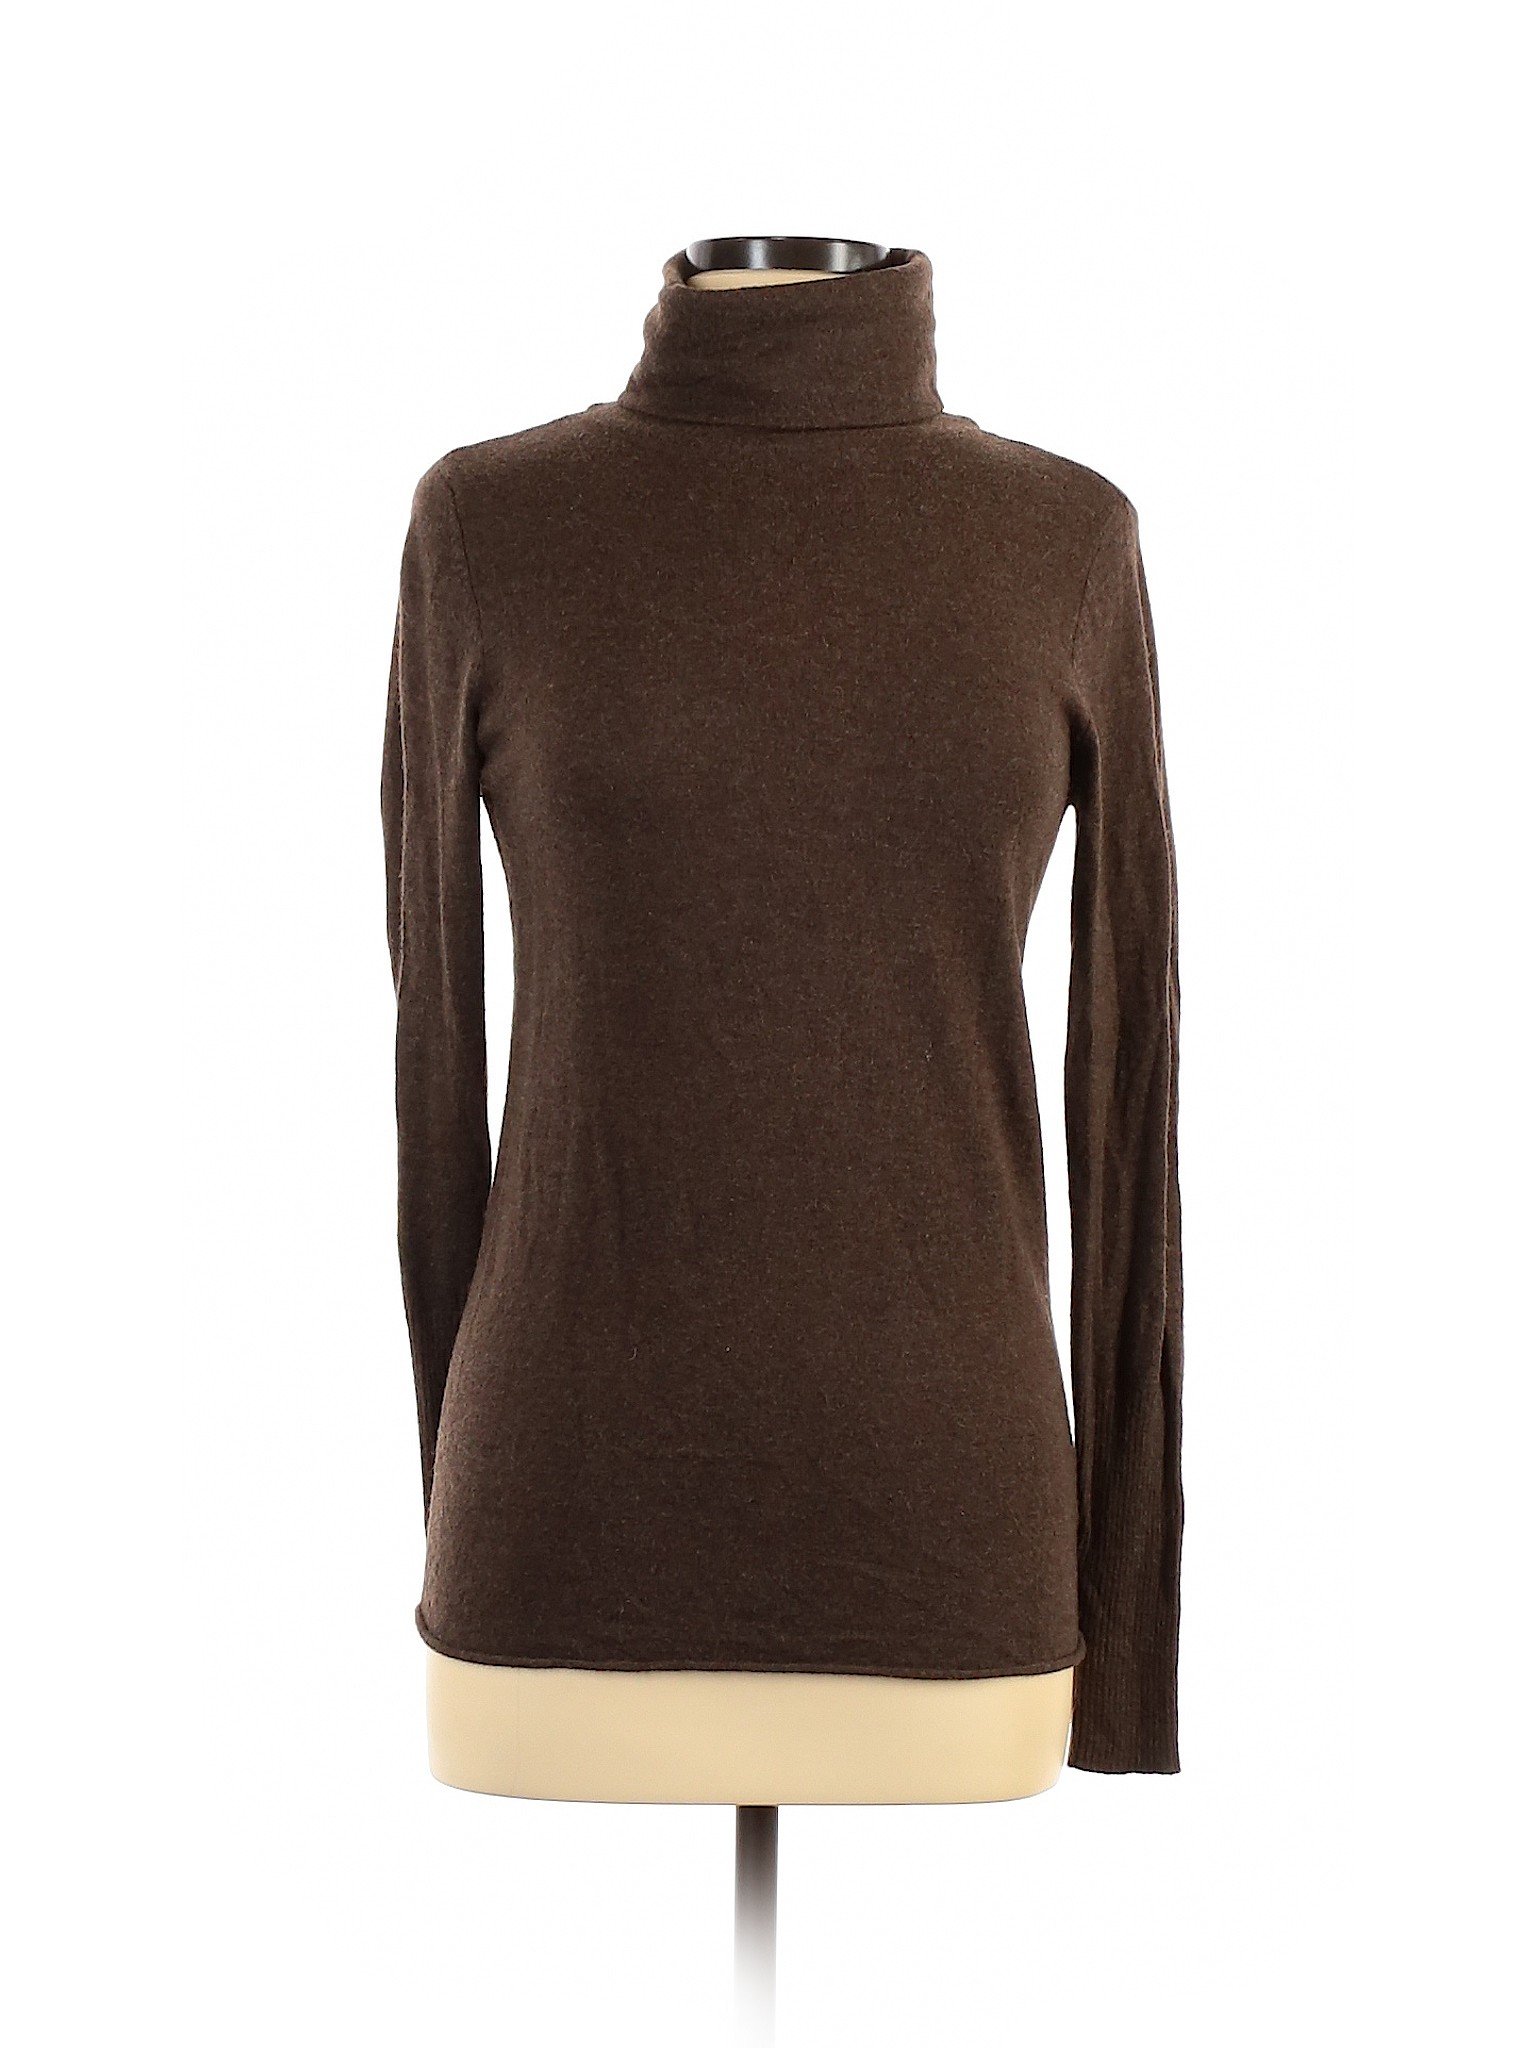 Mossimo Women Brown Turtleneck Sweater M | eBay